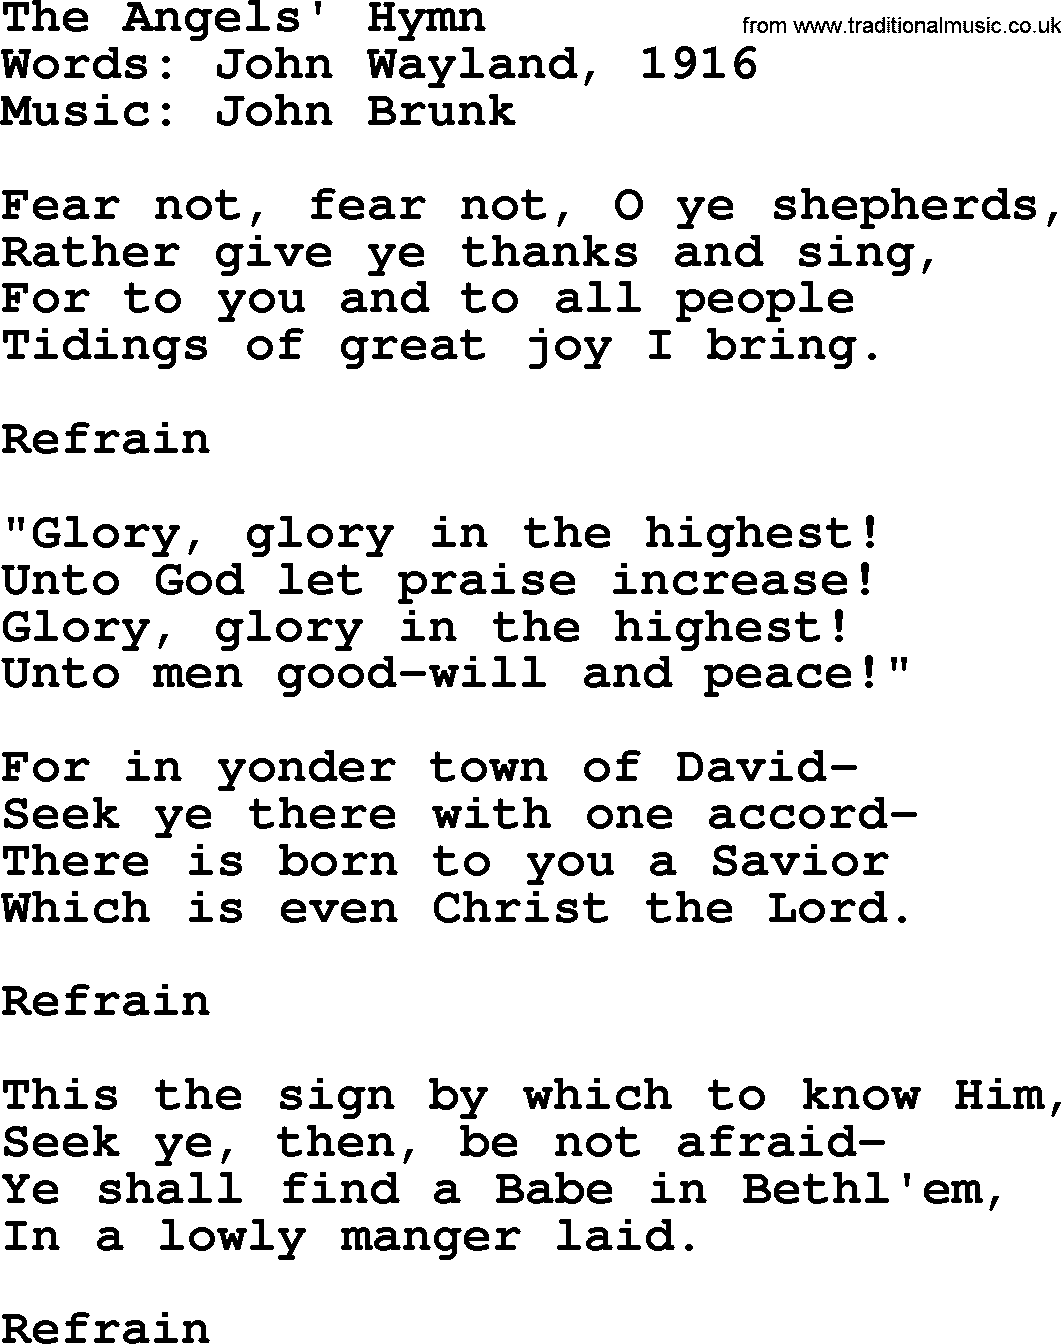 Hymns about Angels, Hymn: The Angels' Hymn.txt lyrics with PDF